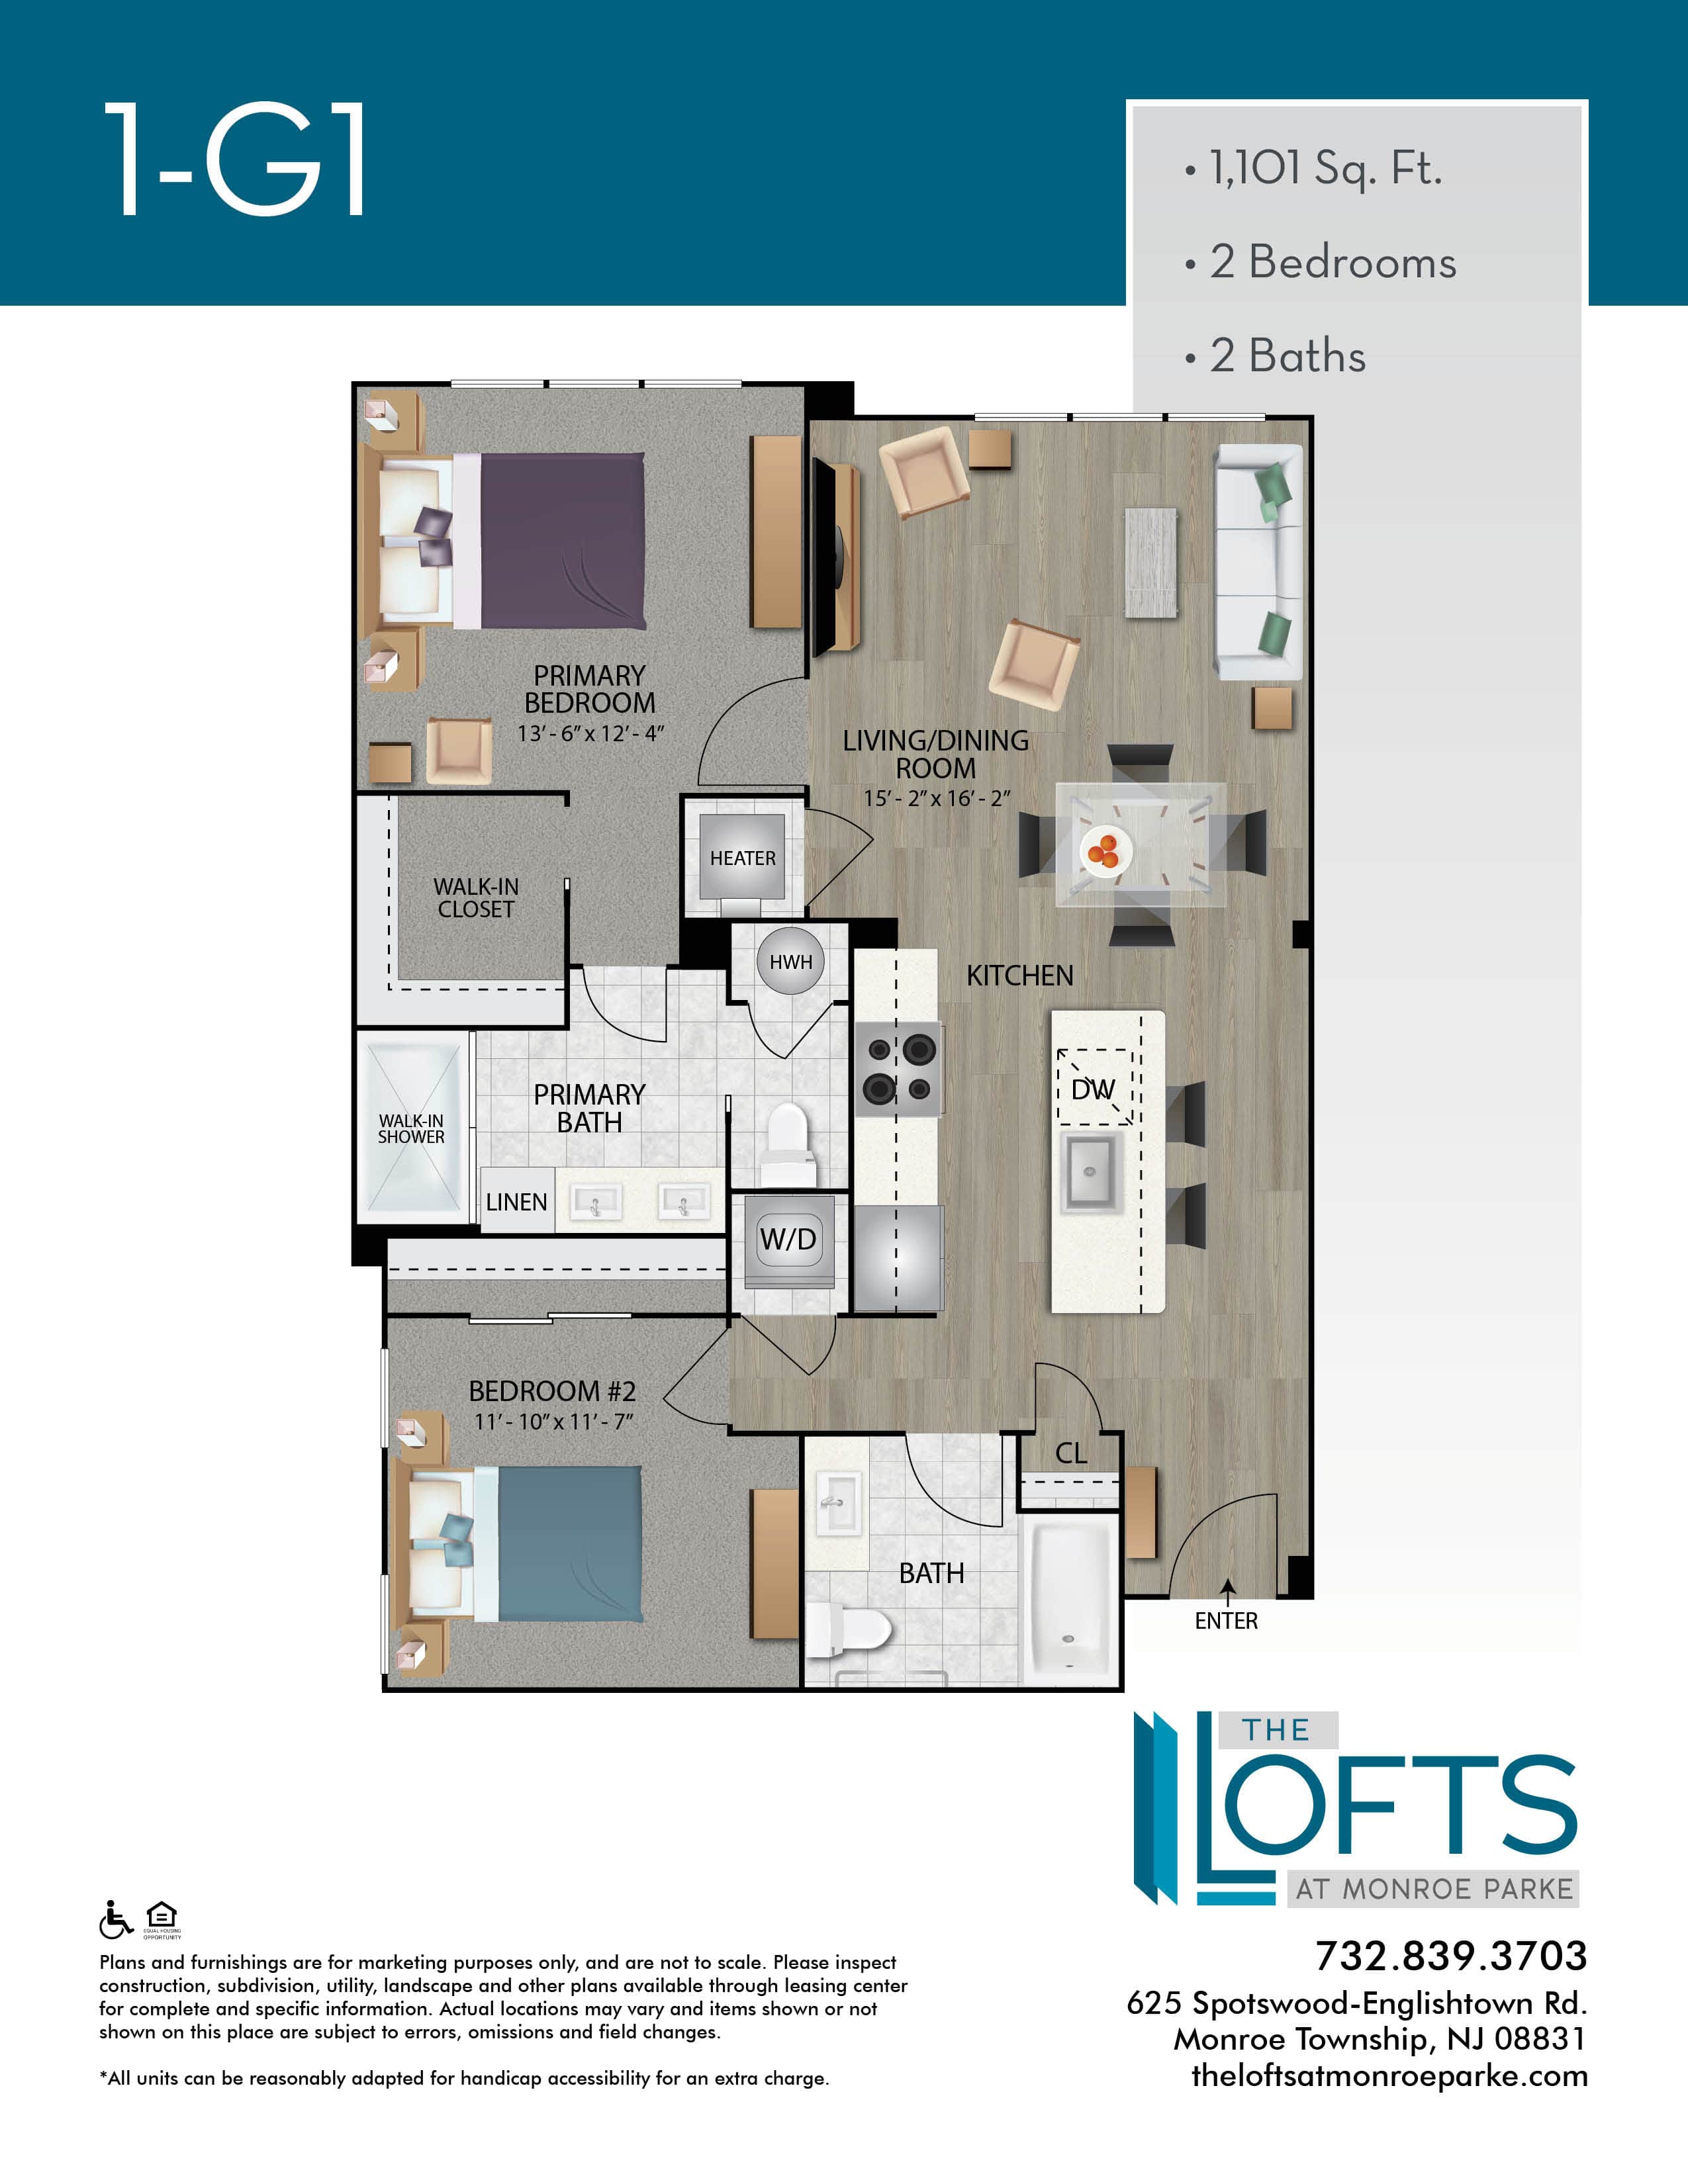 The Lofts at Monroe Park Apartment Floor Plan 1G1